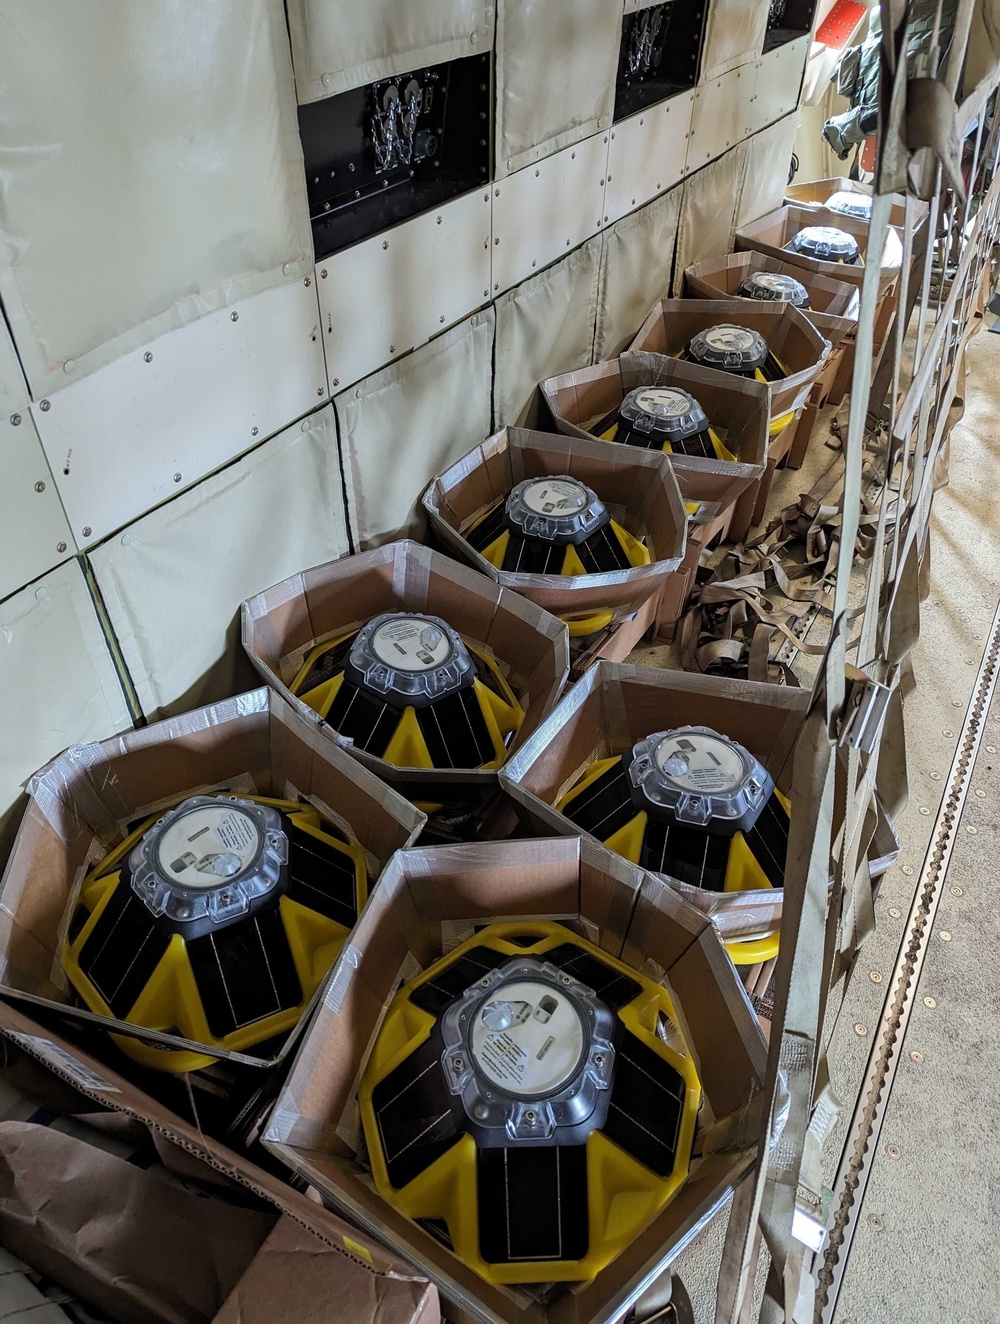 U.S. Naval Research Laboratory’s Scientific Development Squadron VXS-1 dropped 18 SOFAR Spotter buoys